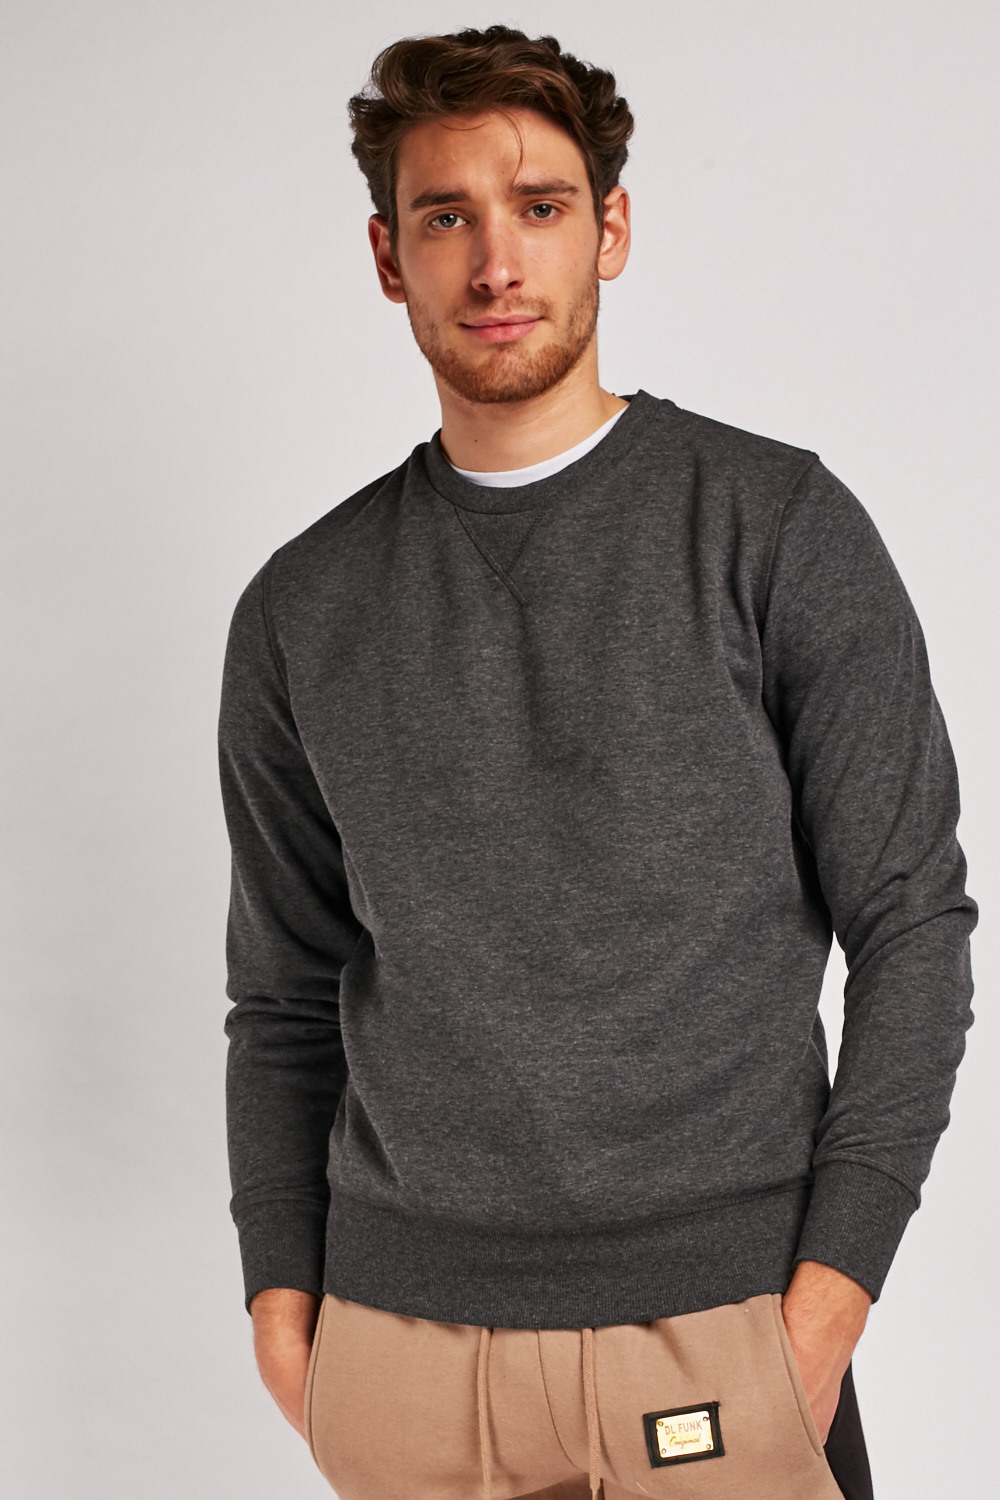 Speckled Grey Jersey Sweatshirt - Just $7